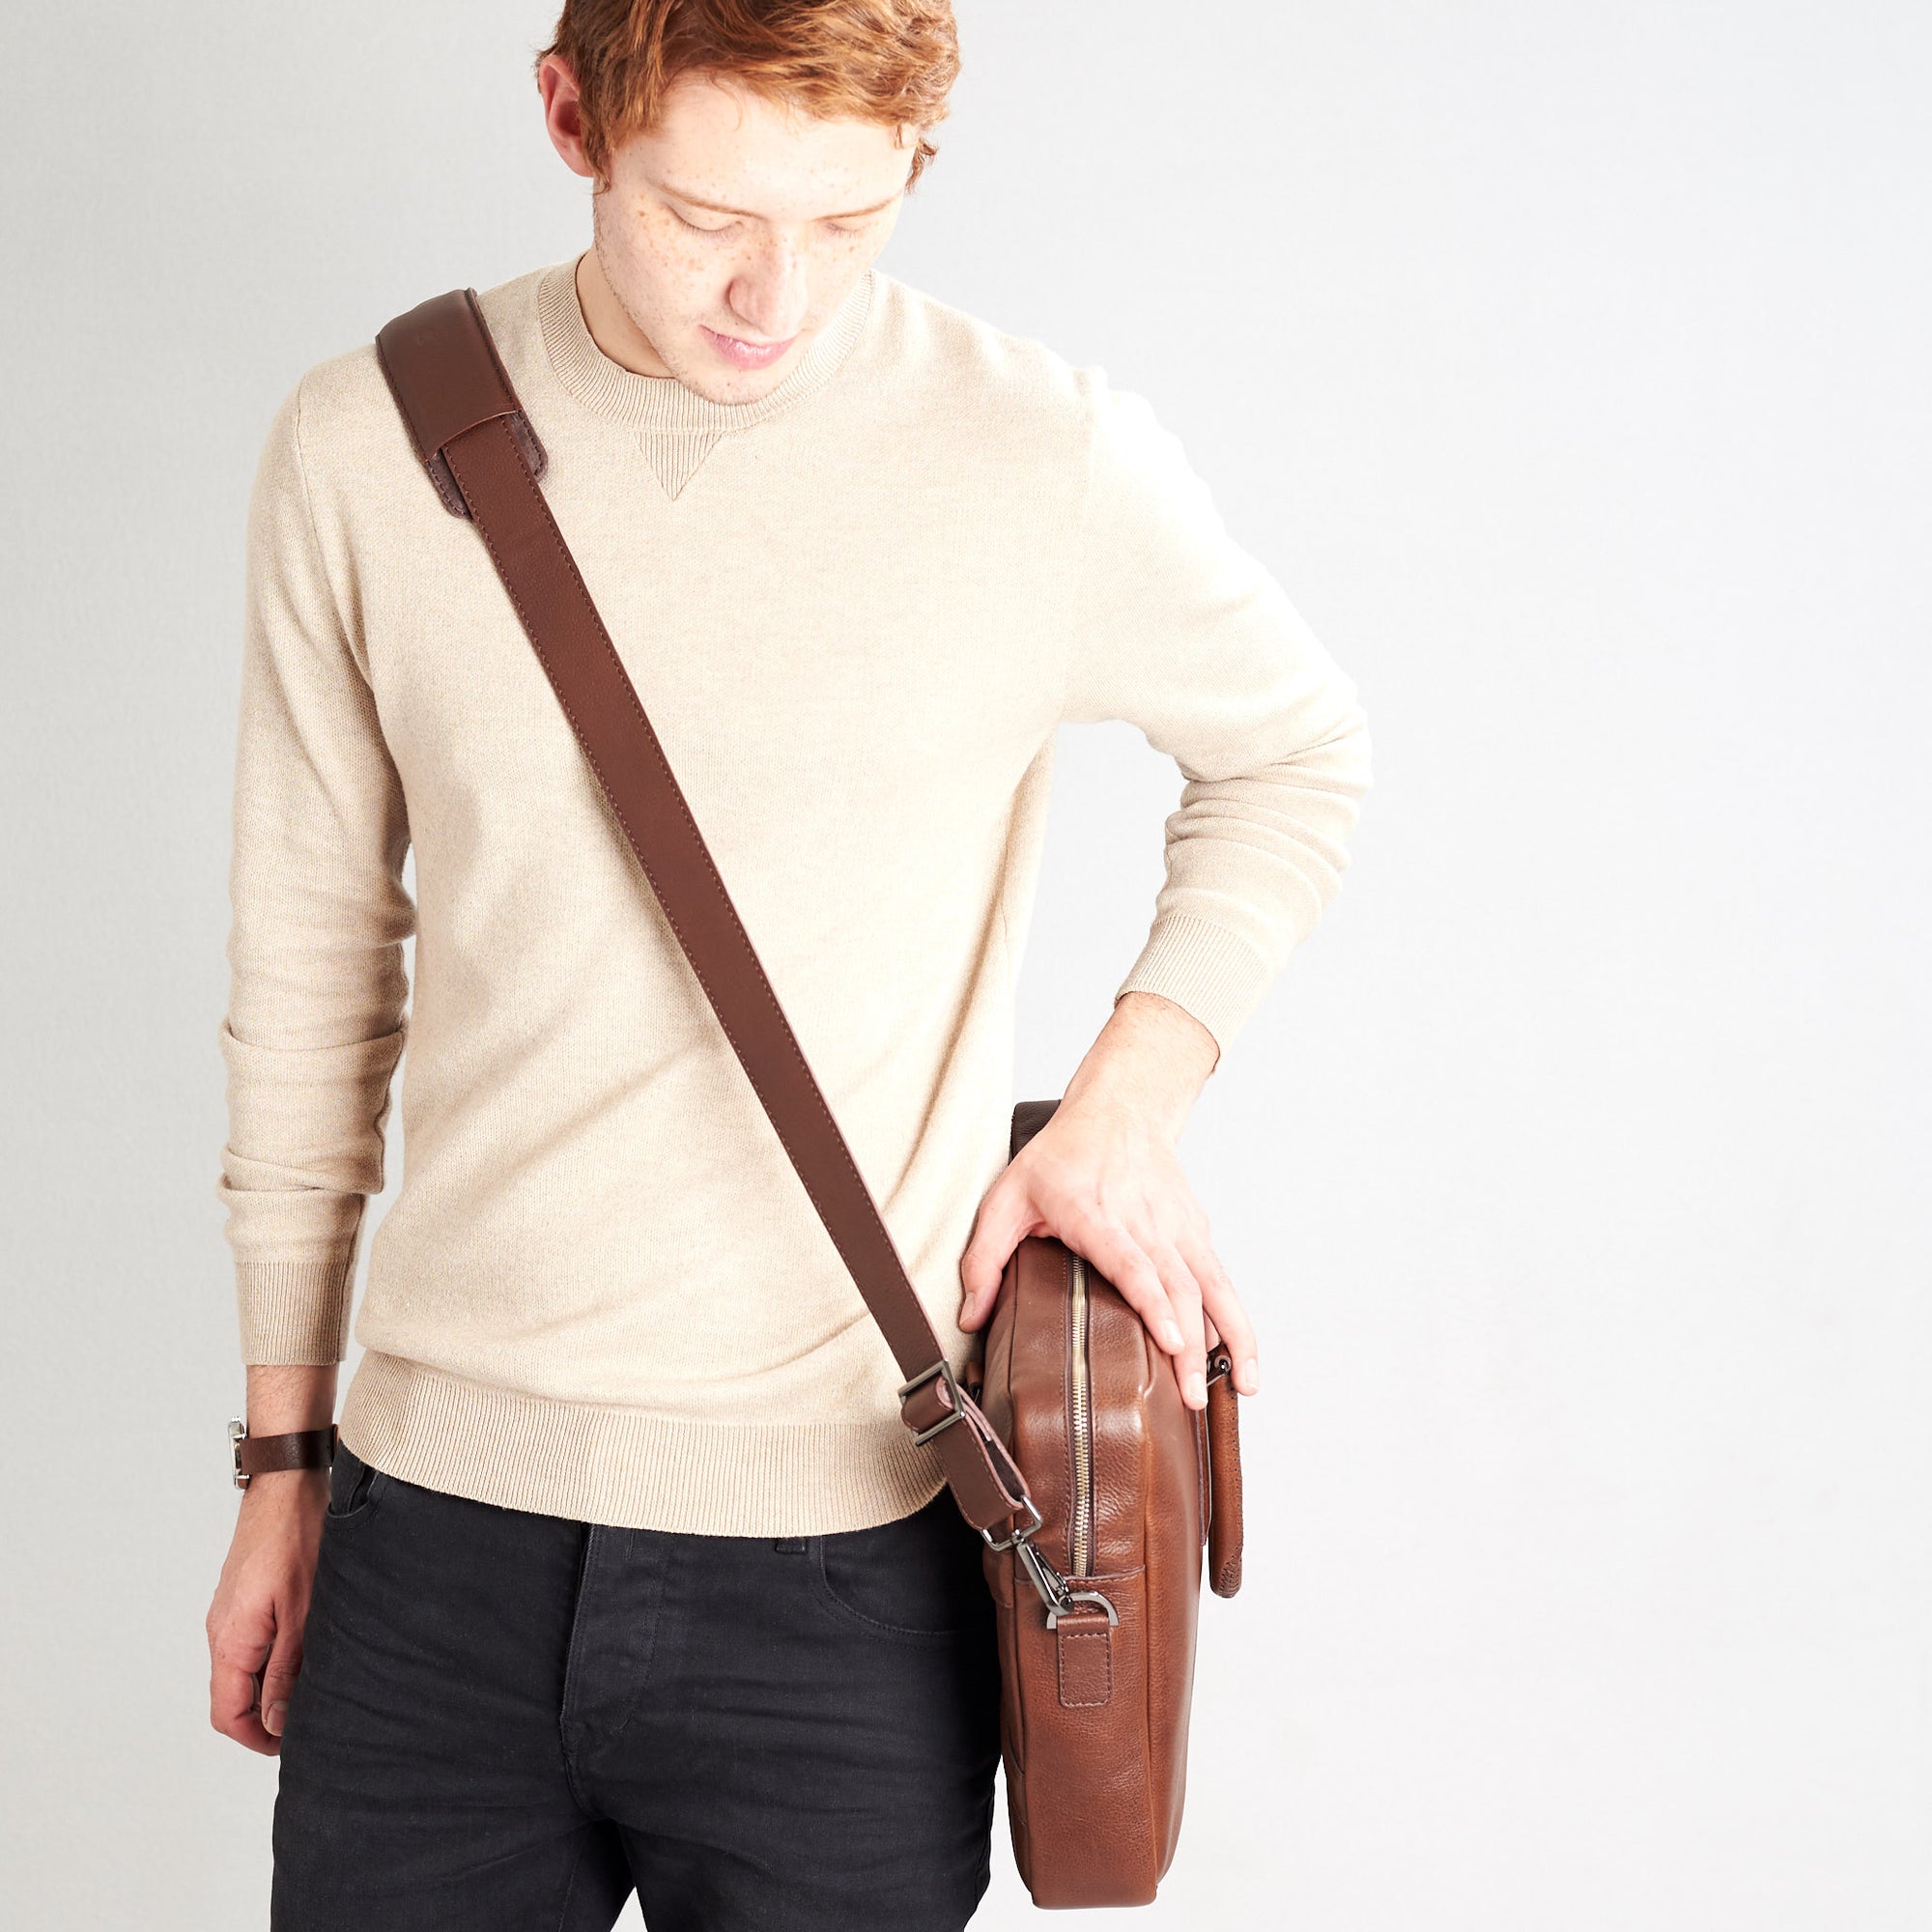 Shoulder bag in use side view of workbag. Brown leather briefcase laptop bag for men. Gazeli laptop briefcase by Capra Leather.